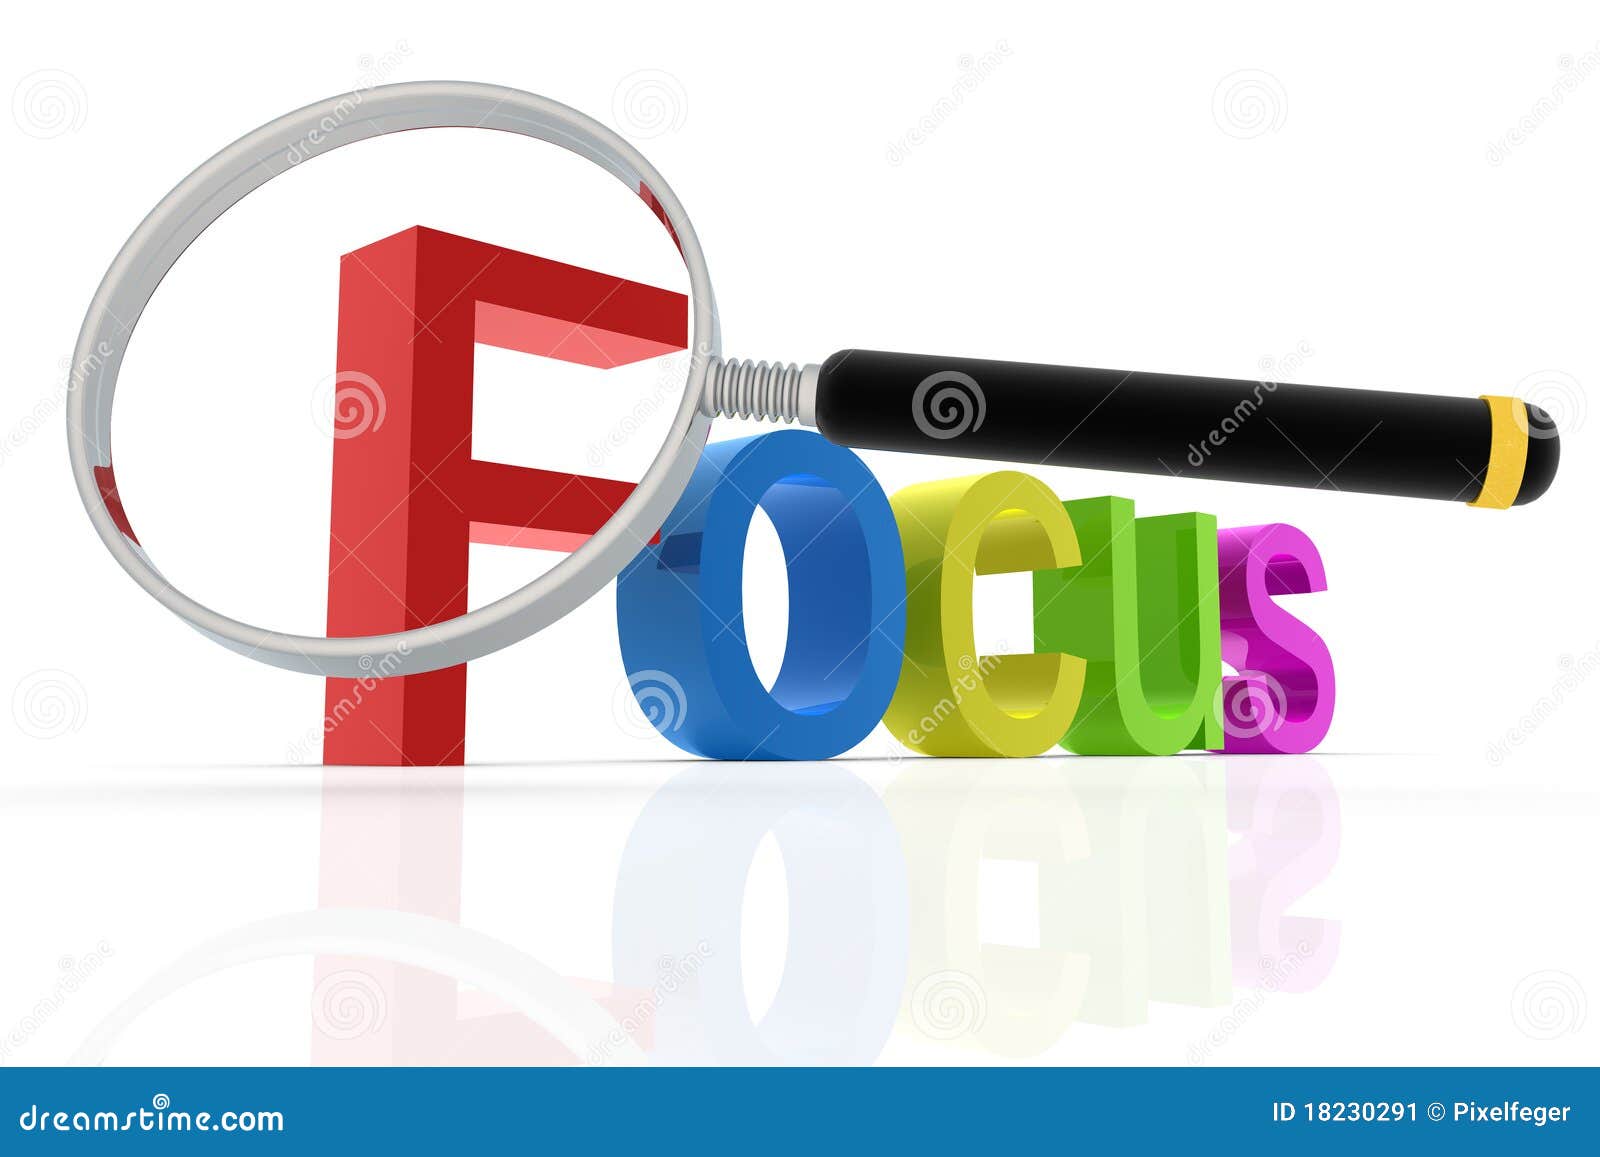 focus word